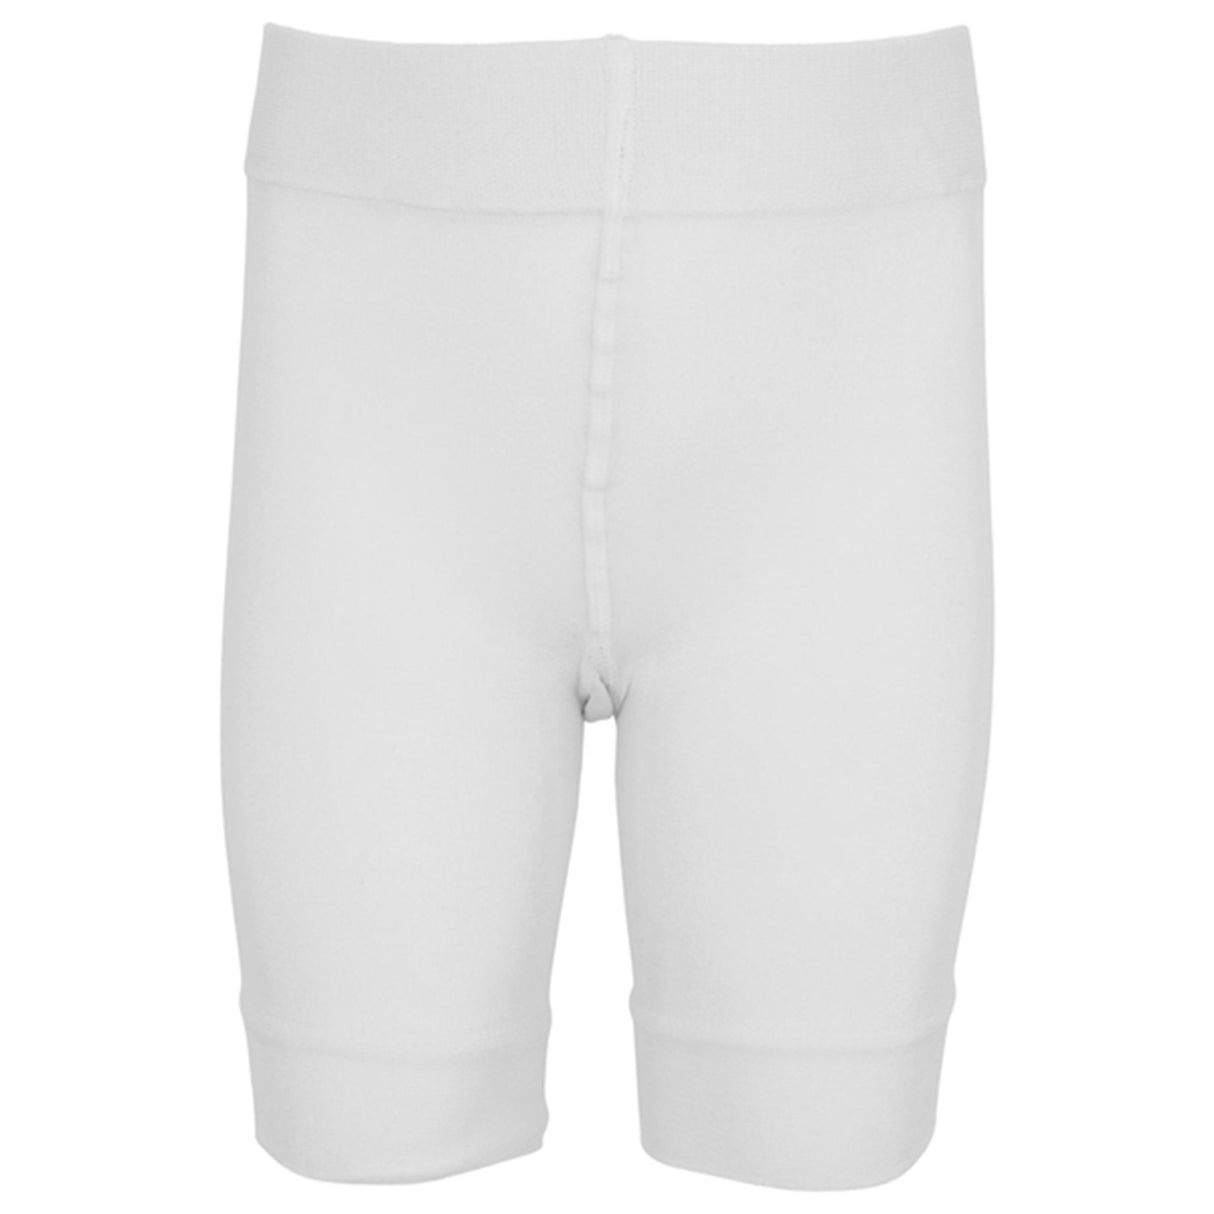 MP 301 Microfiber Shorts 1 White